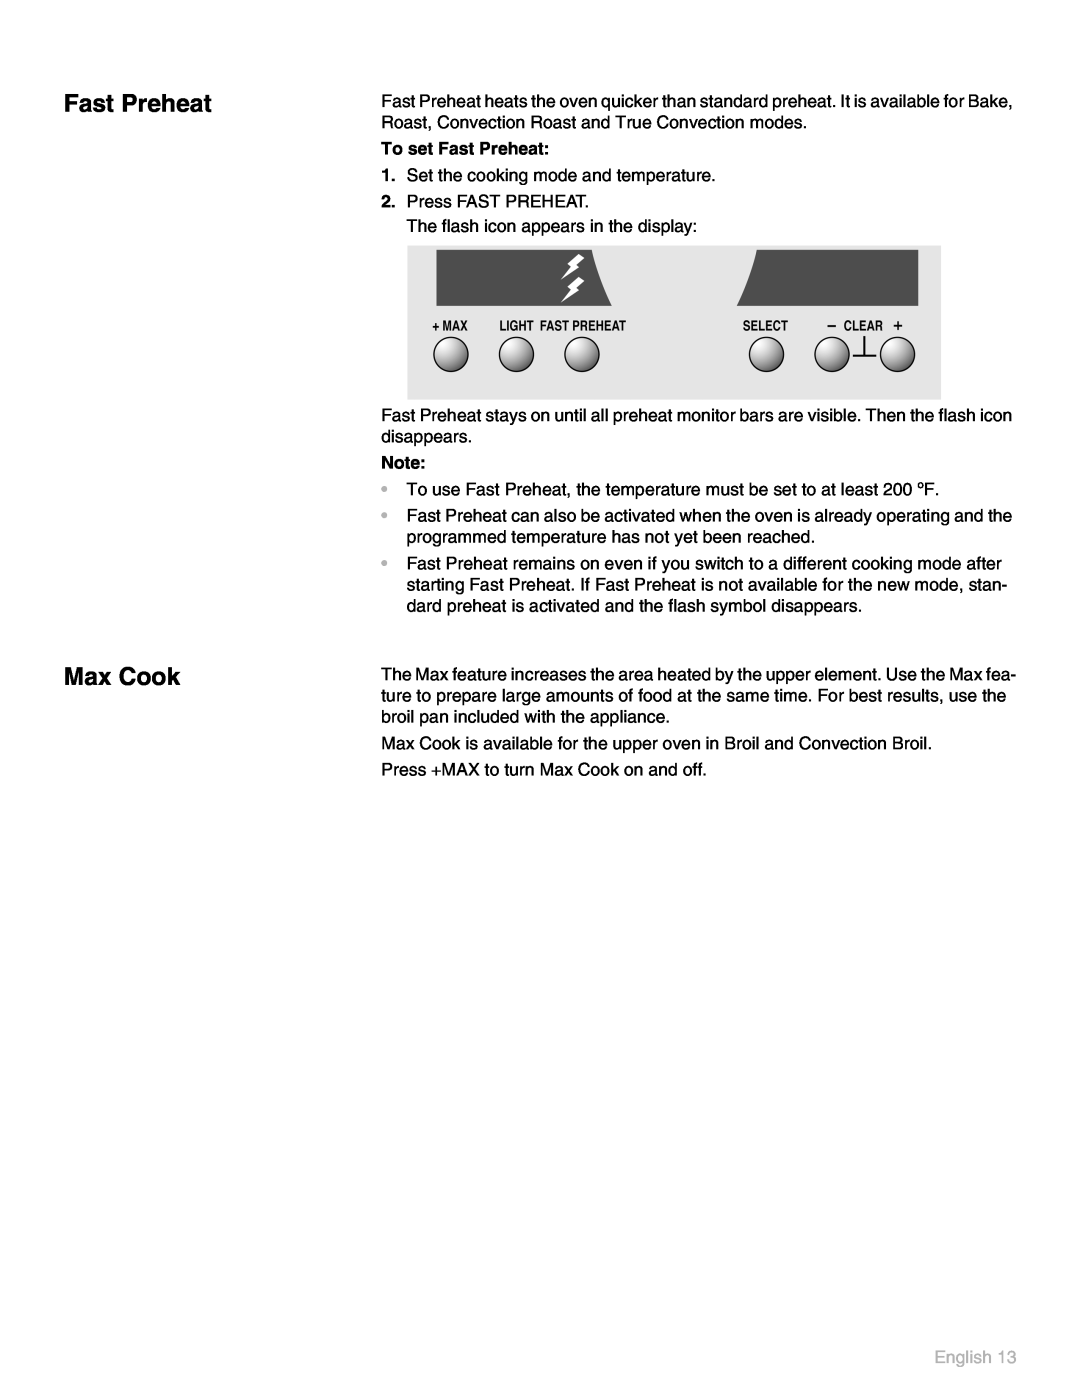 Thermador POD 302 manual Fast Preheat Max Cook, To set Fast Preheat, English 